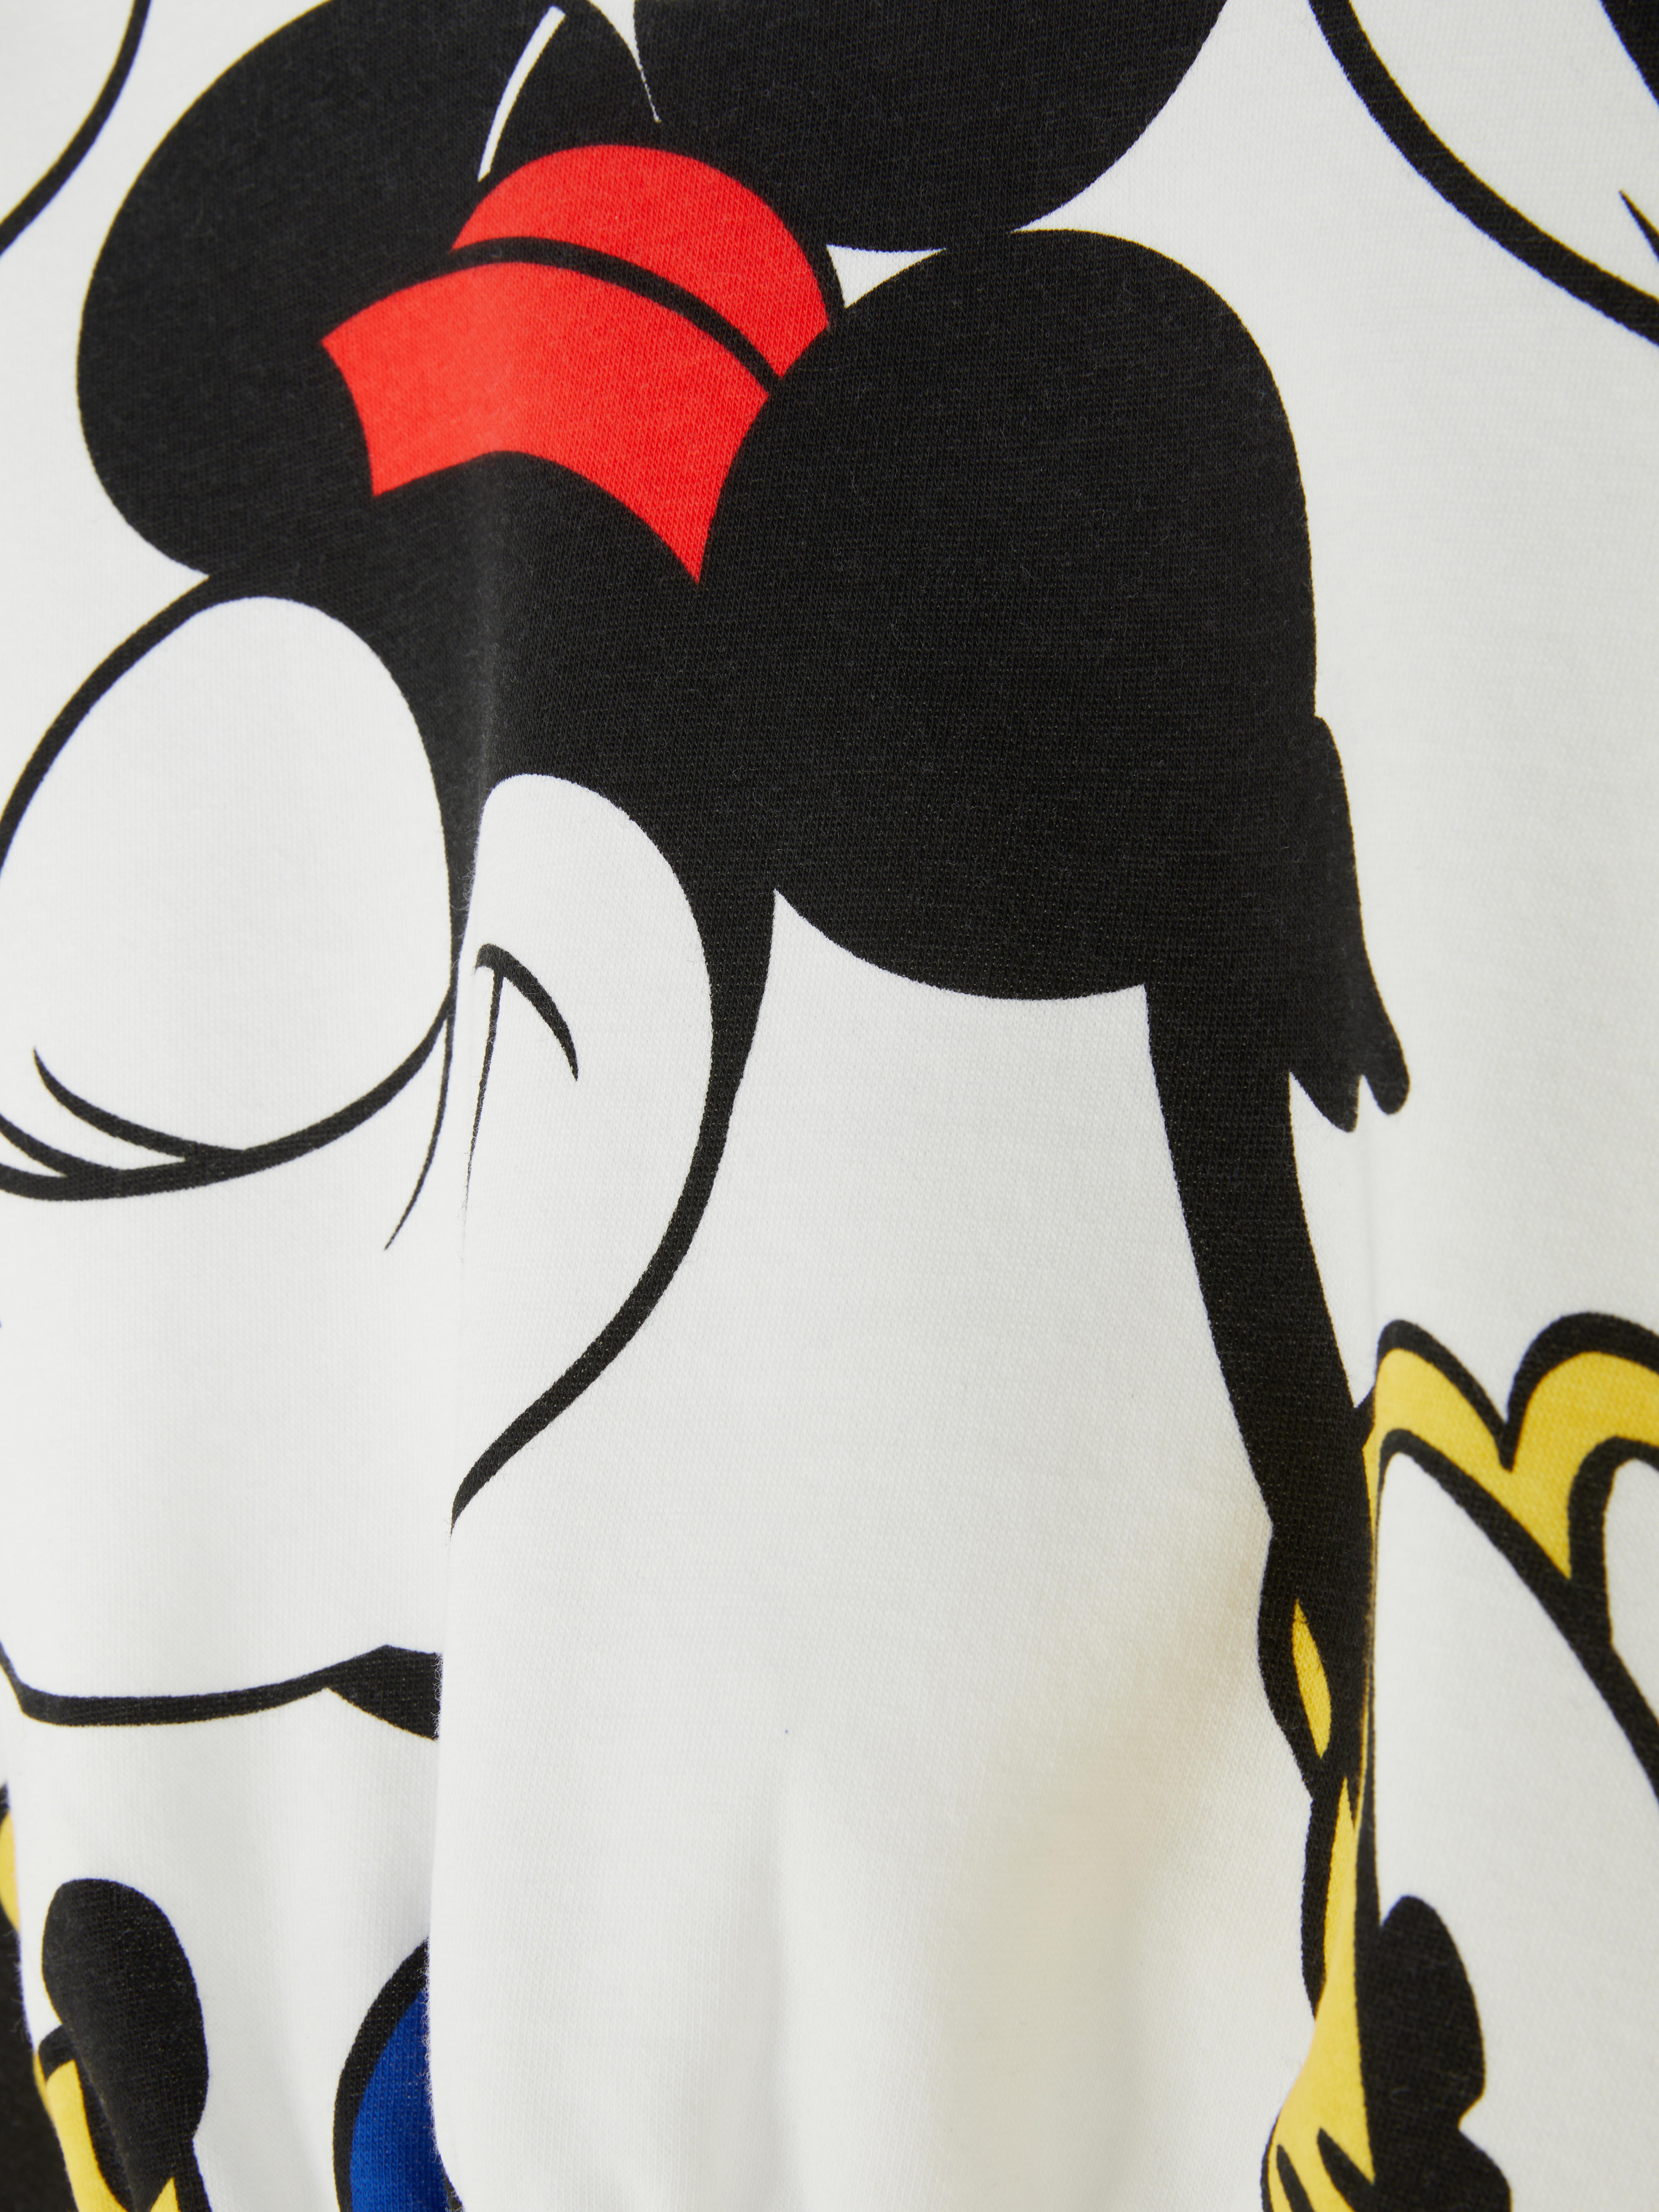 Disney's Mickey Mouse & Friends Originals Cropped Sweatshirt